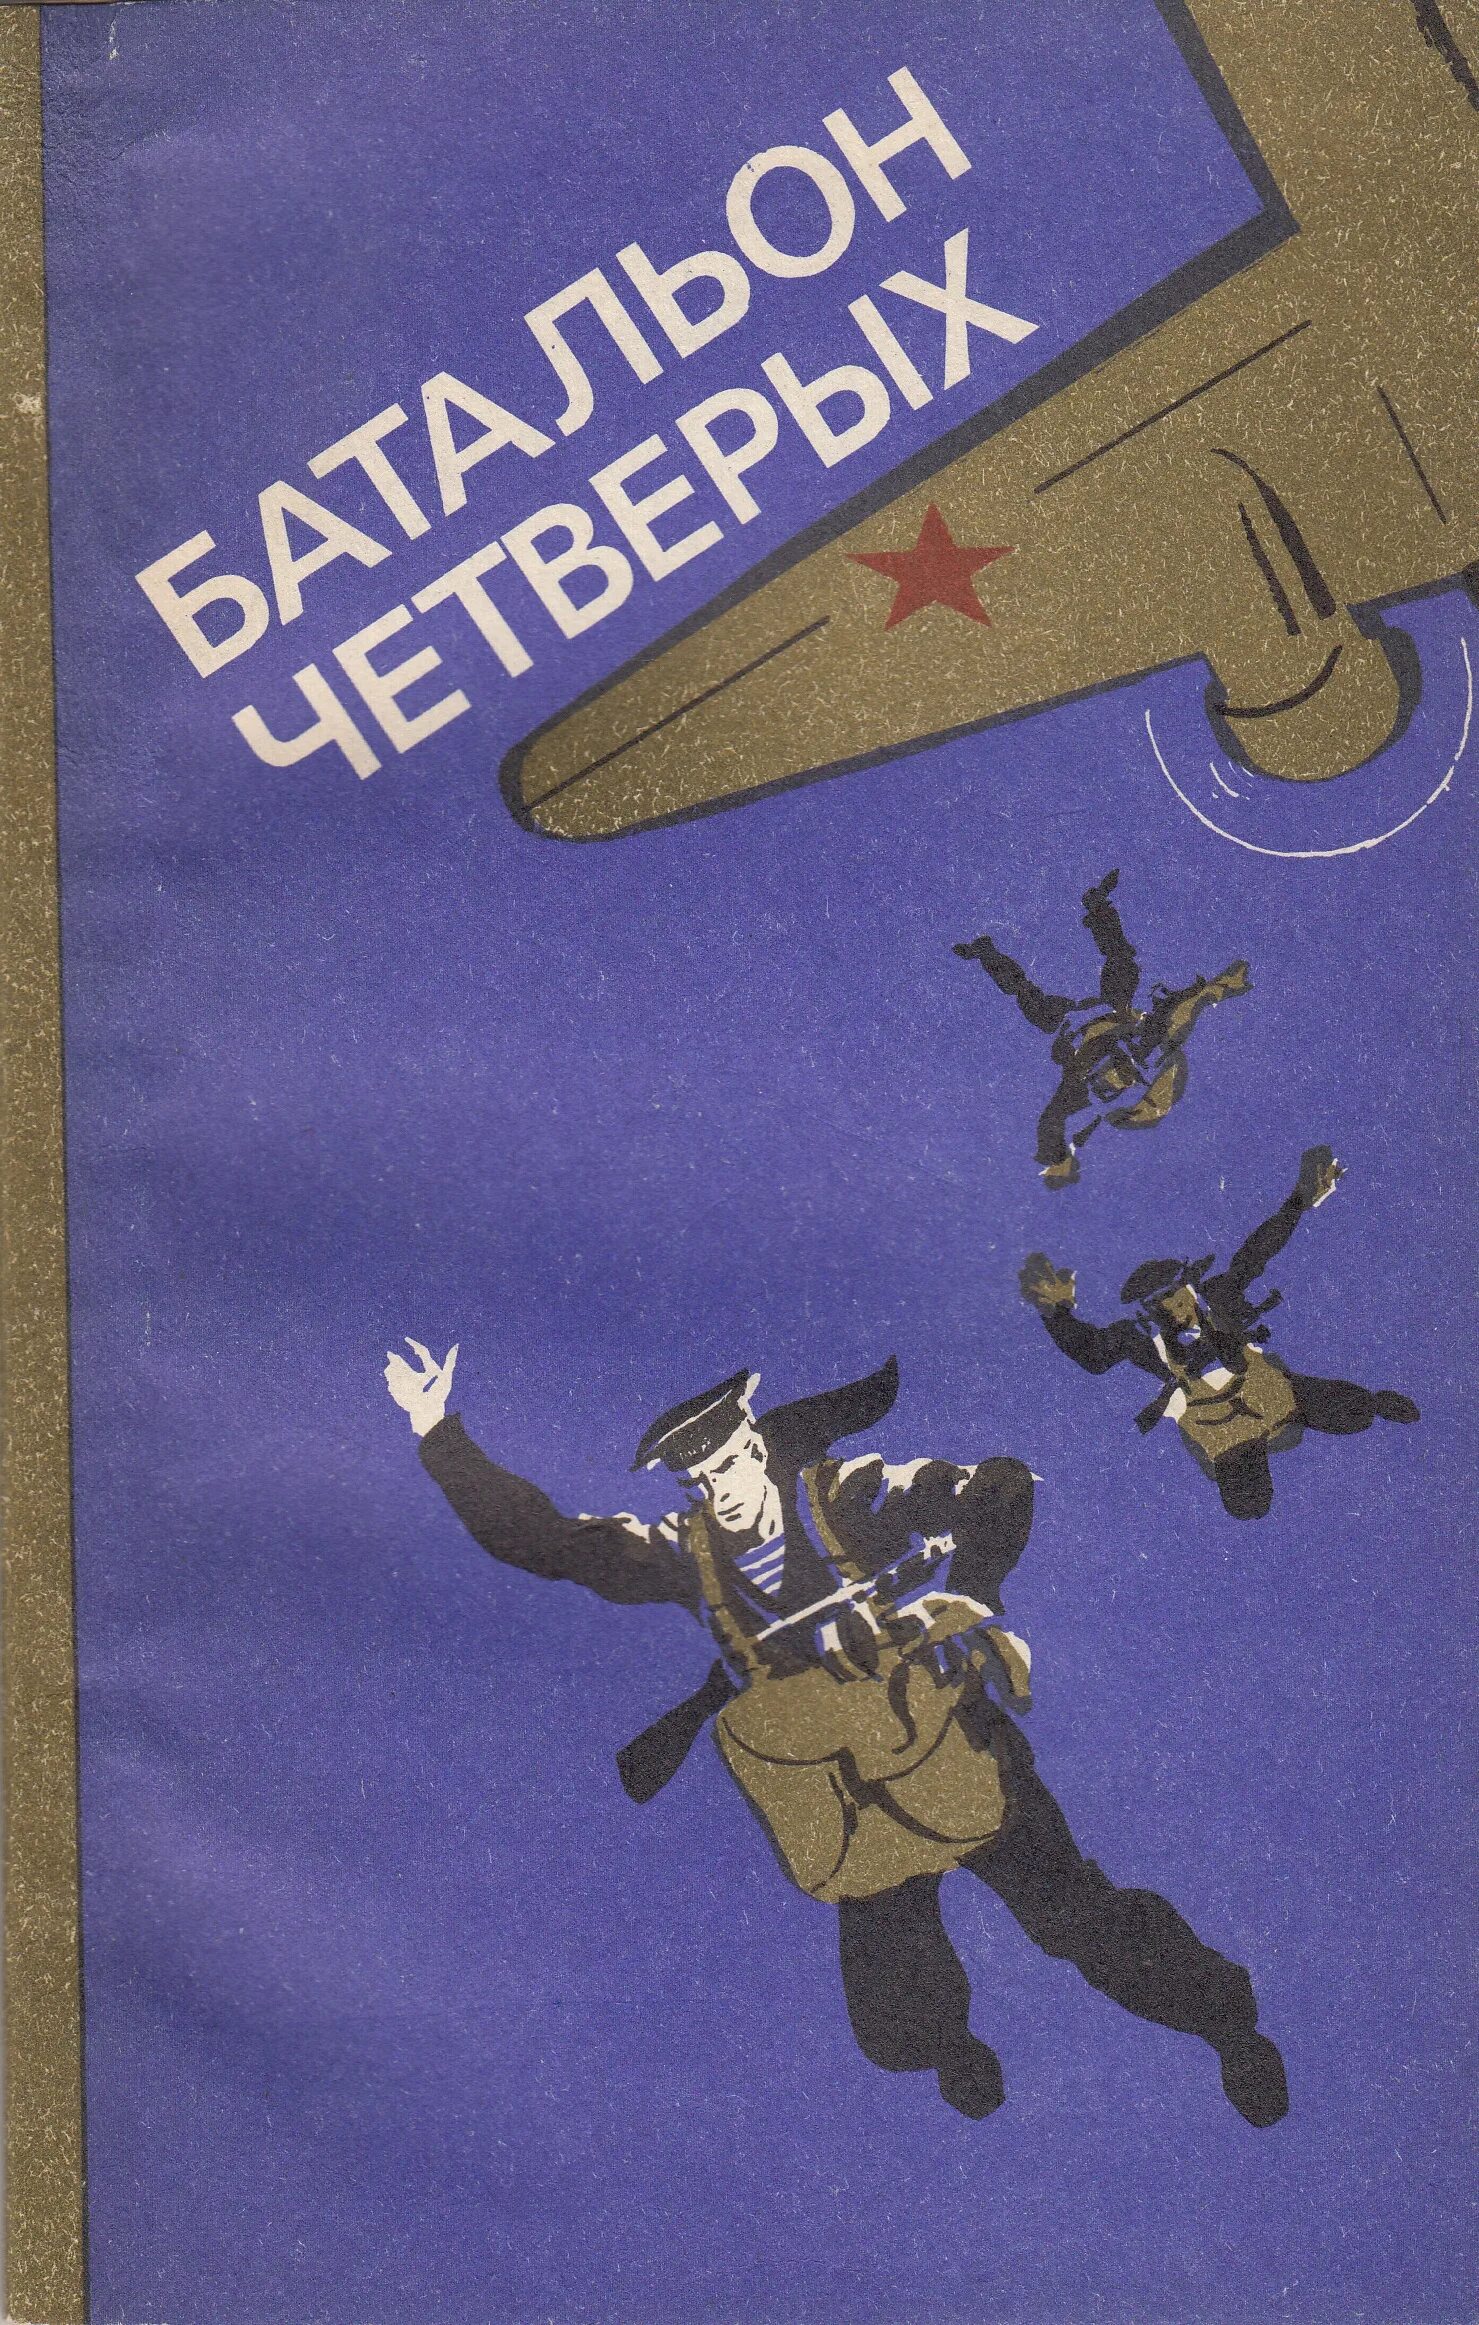 Батальон четверых. Батальон четверых Соболев. Батальон четверых книжка. Книга батальон четверых с иллюстрациями.